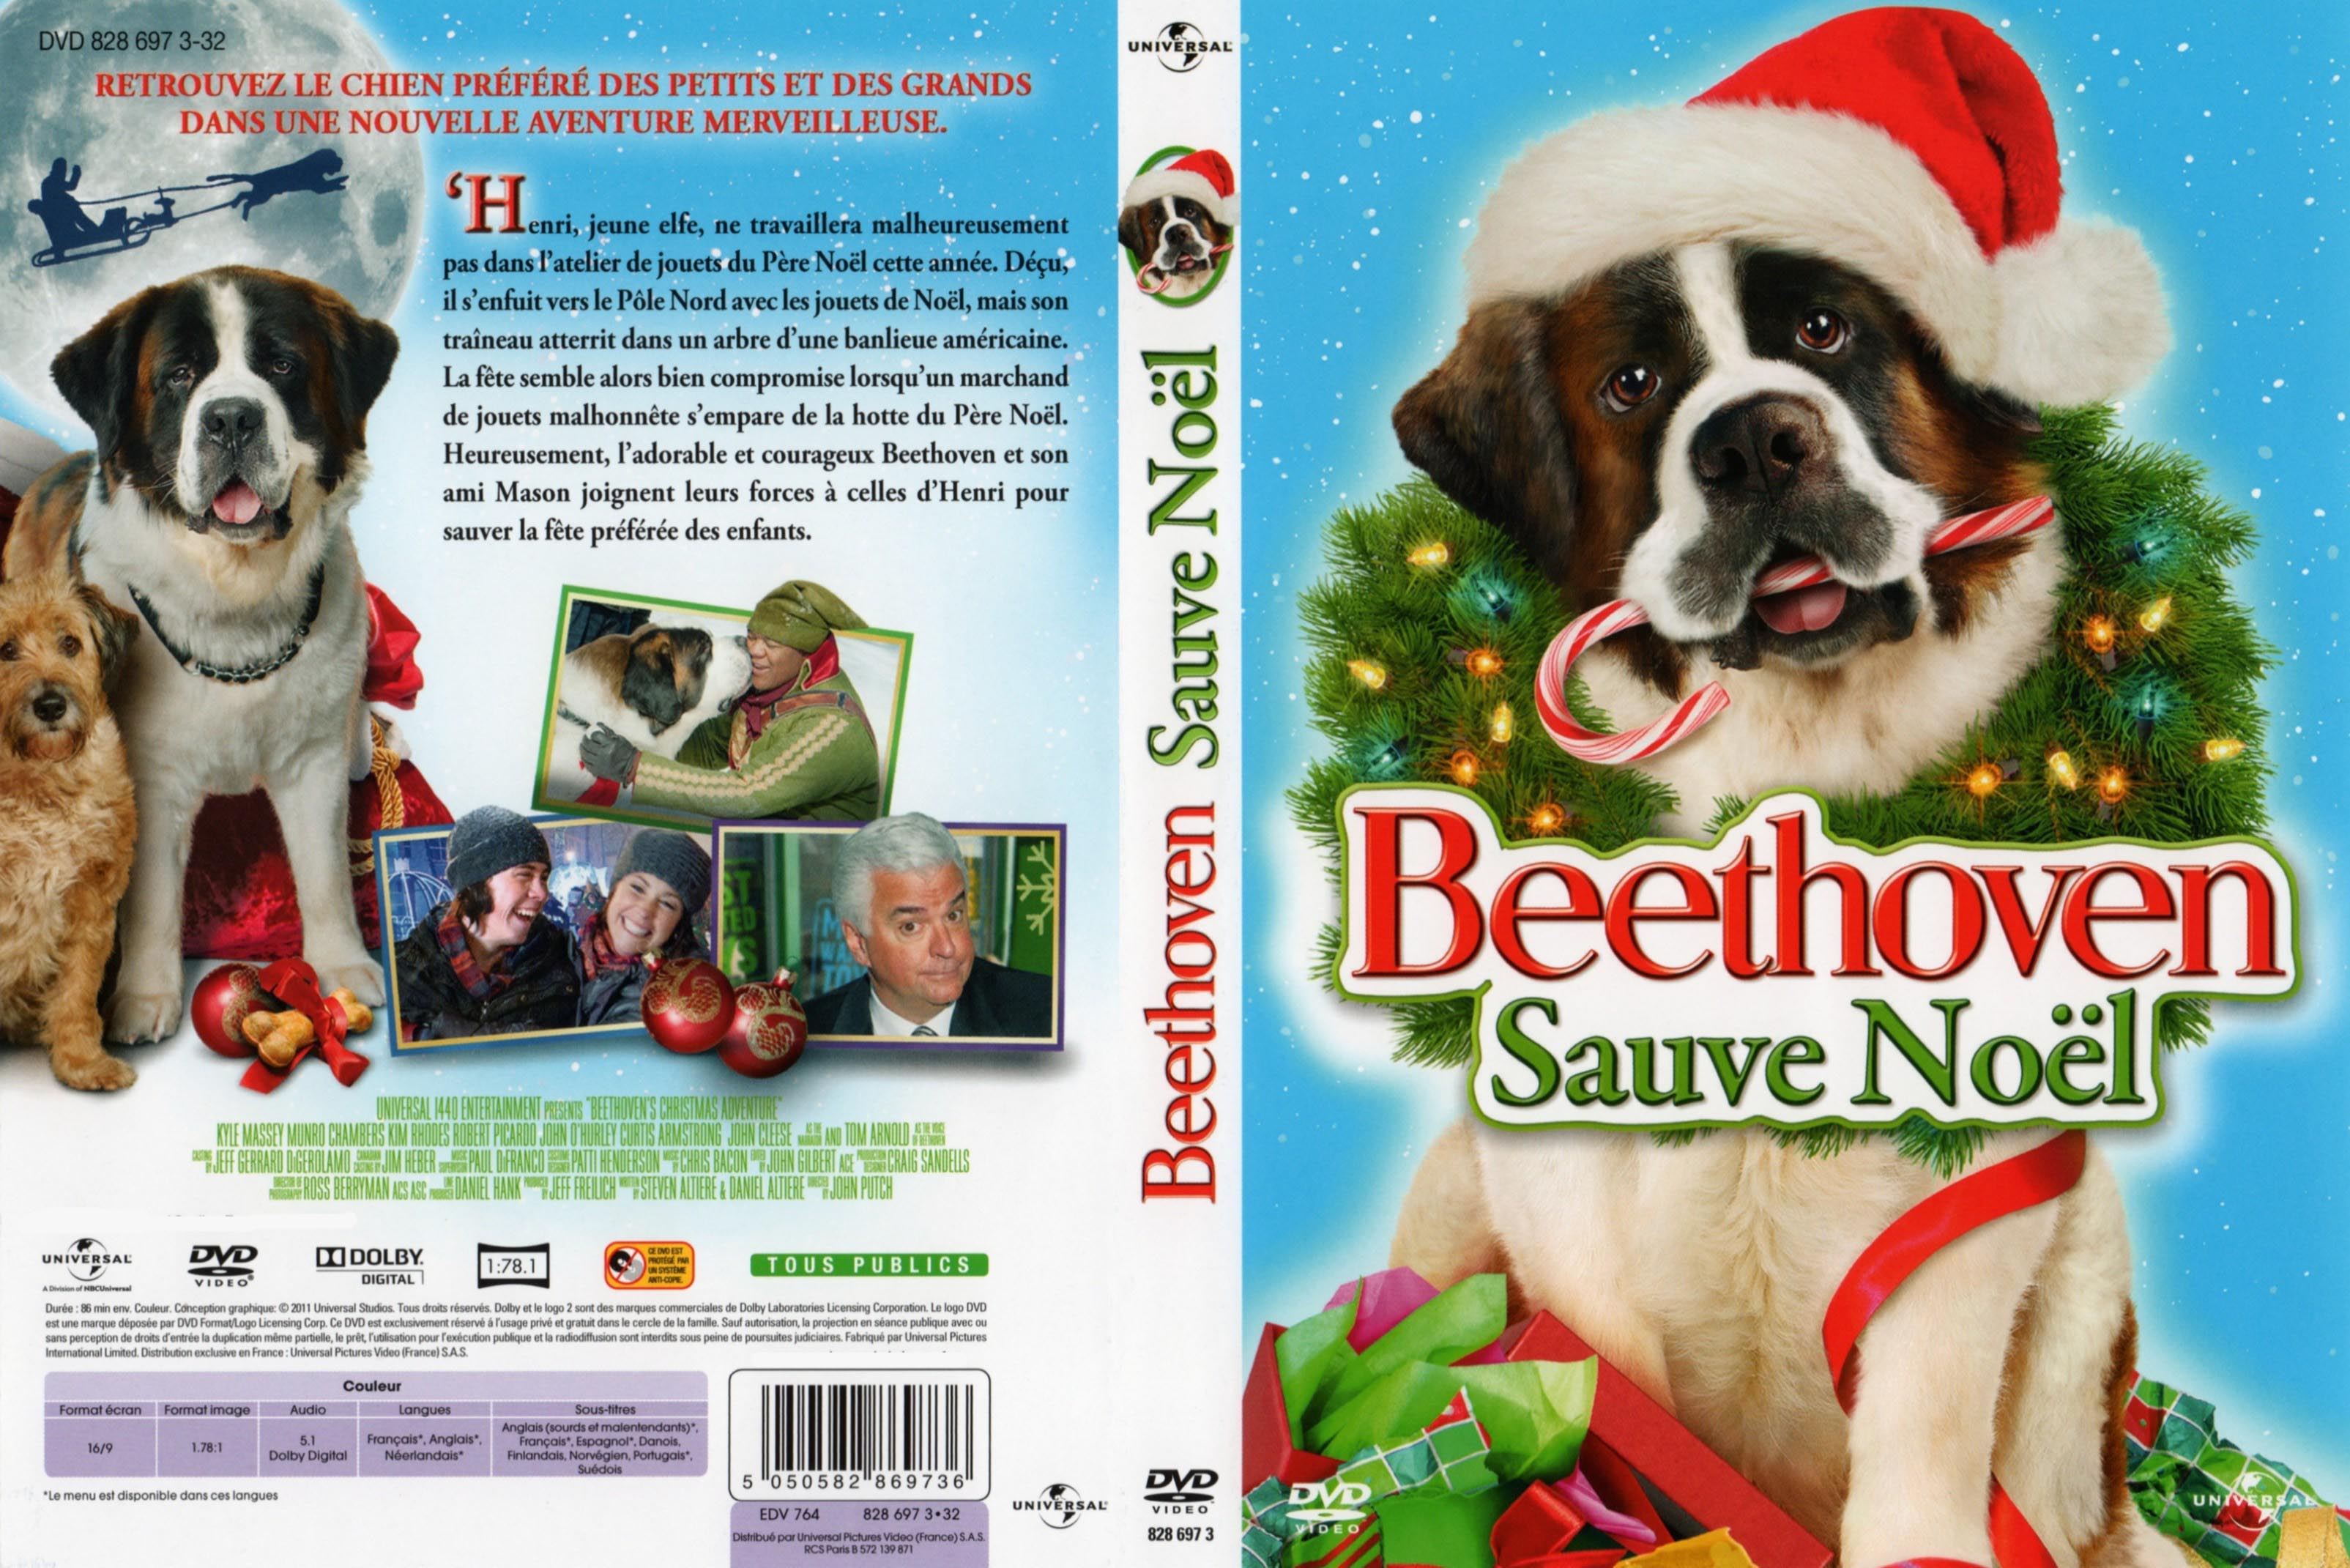 Jaquette DVD Beethoven Sauve Noel